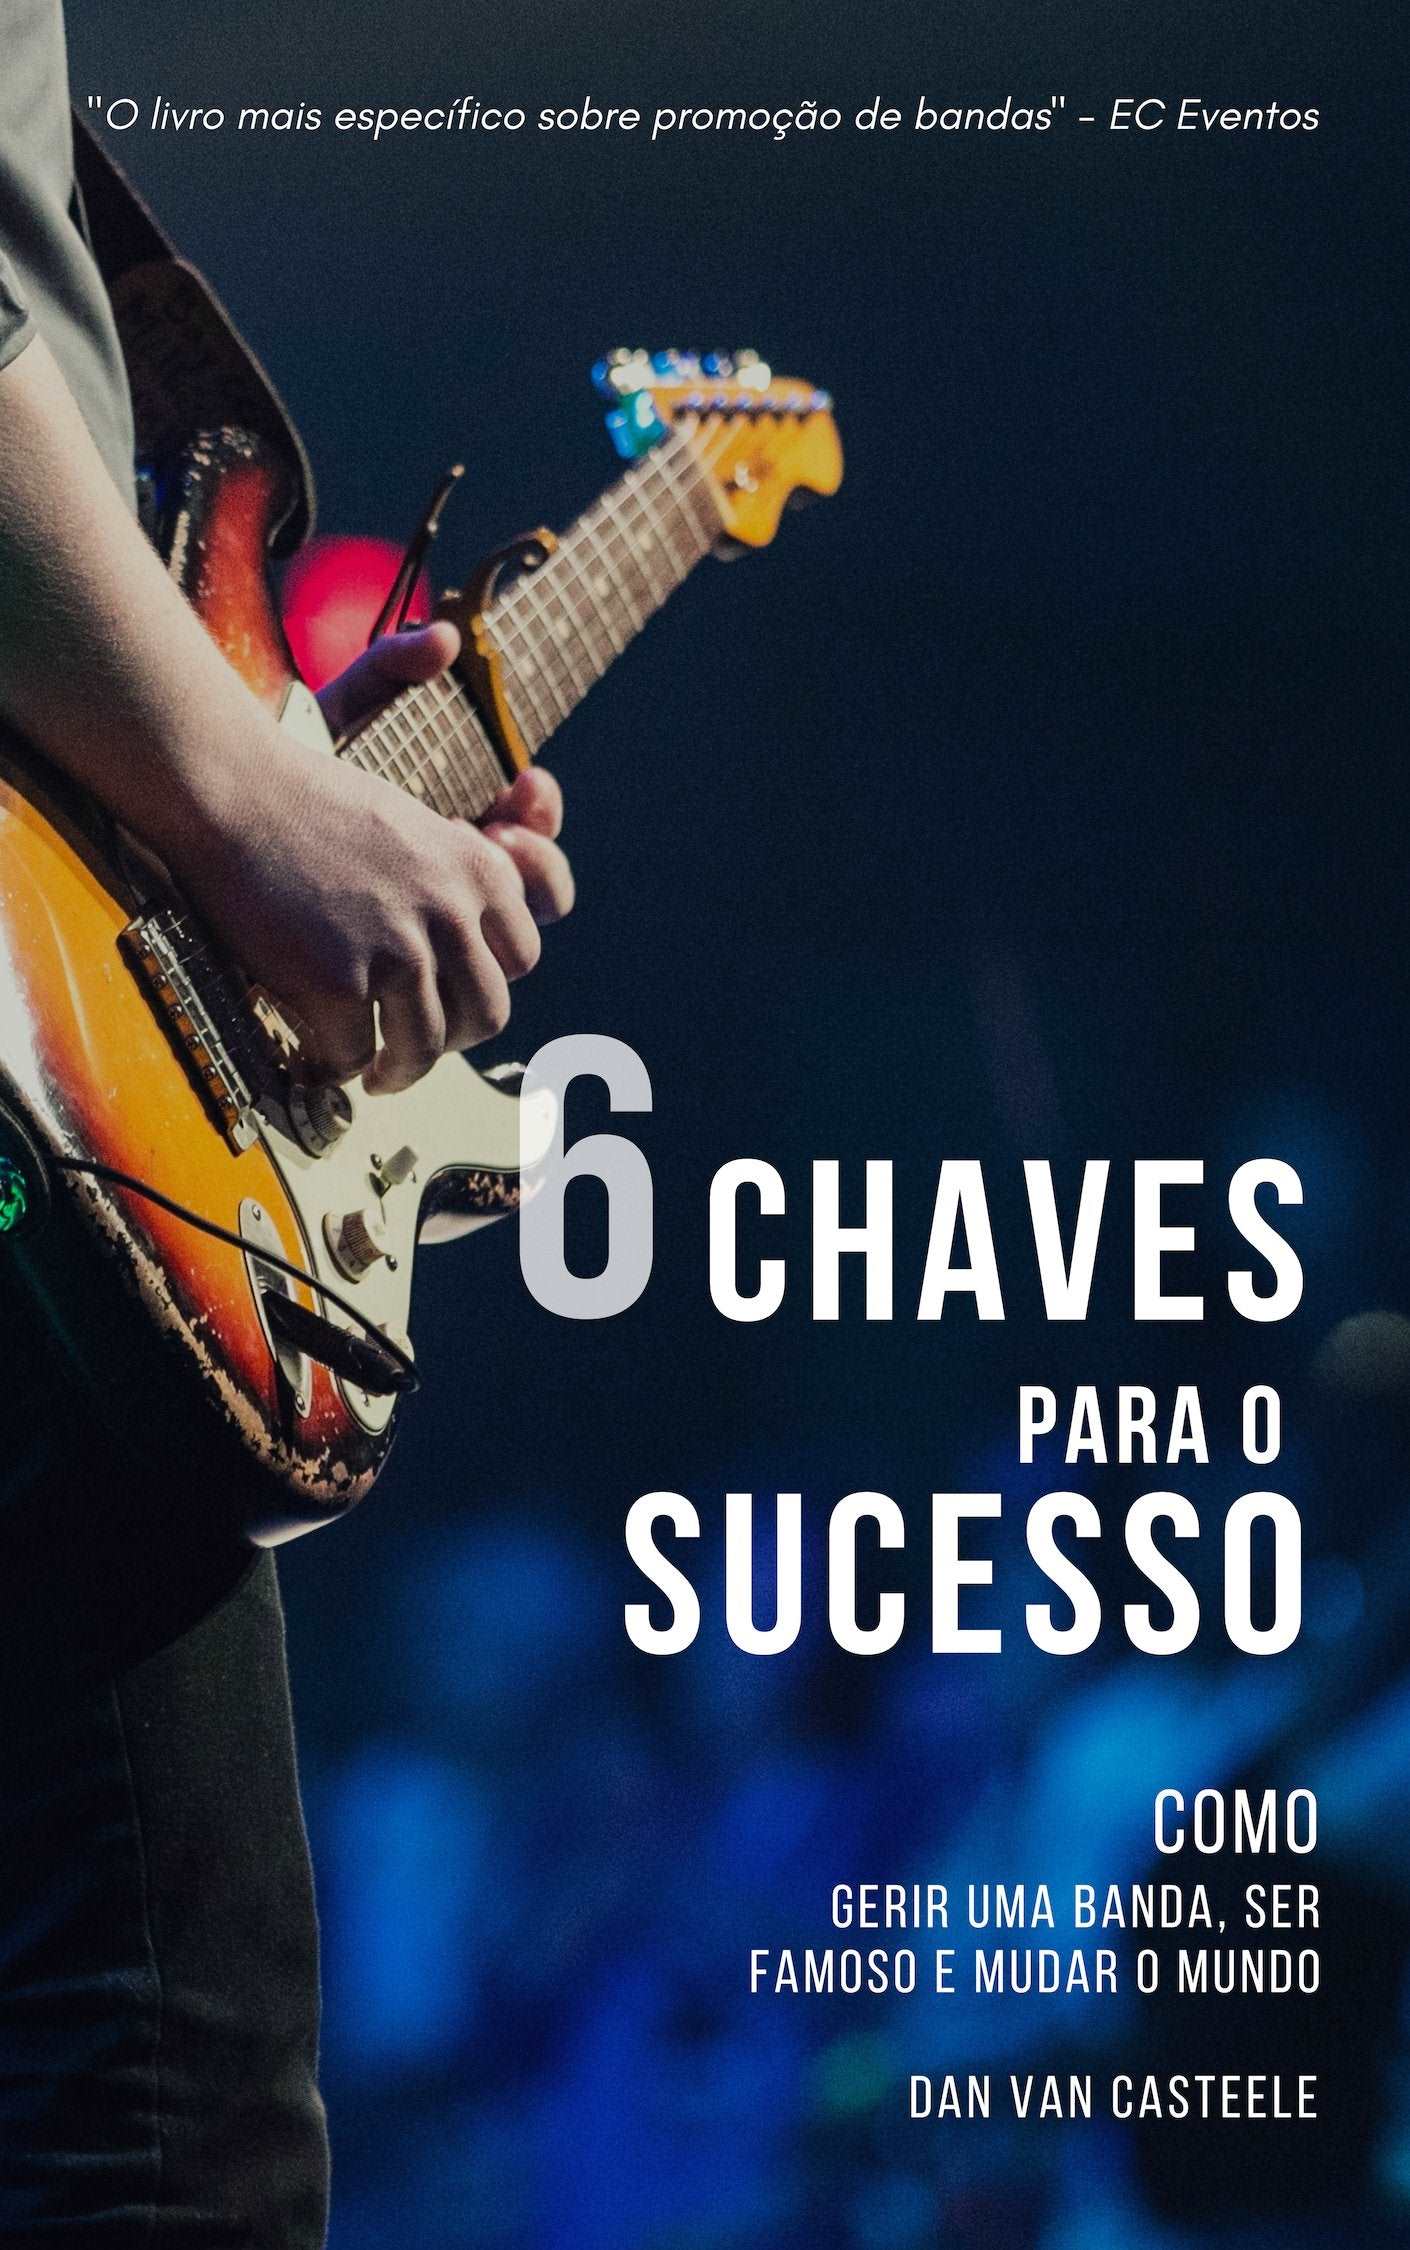 6 Keys to Success Portuguese